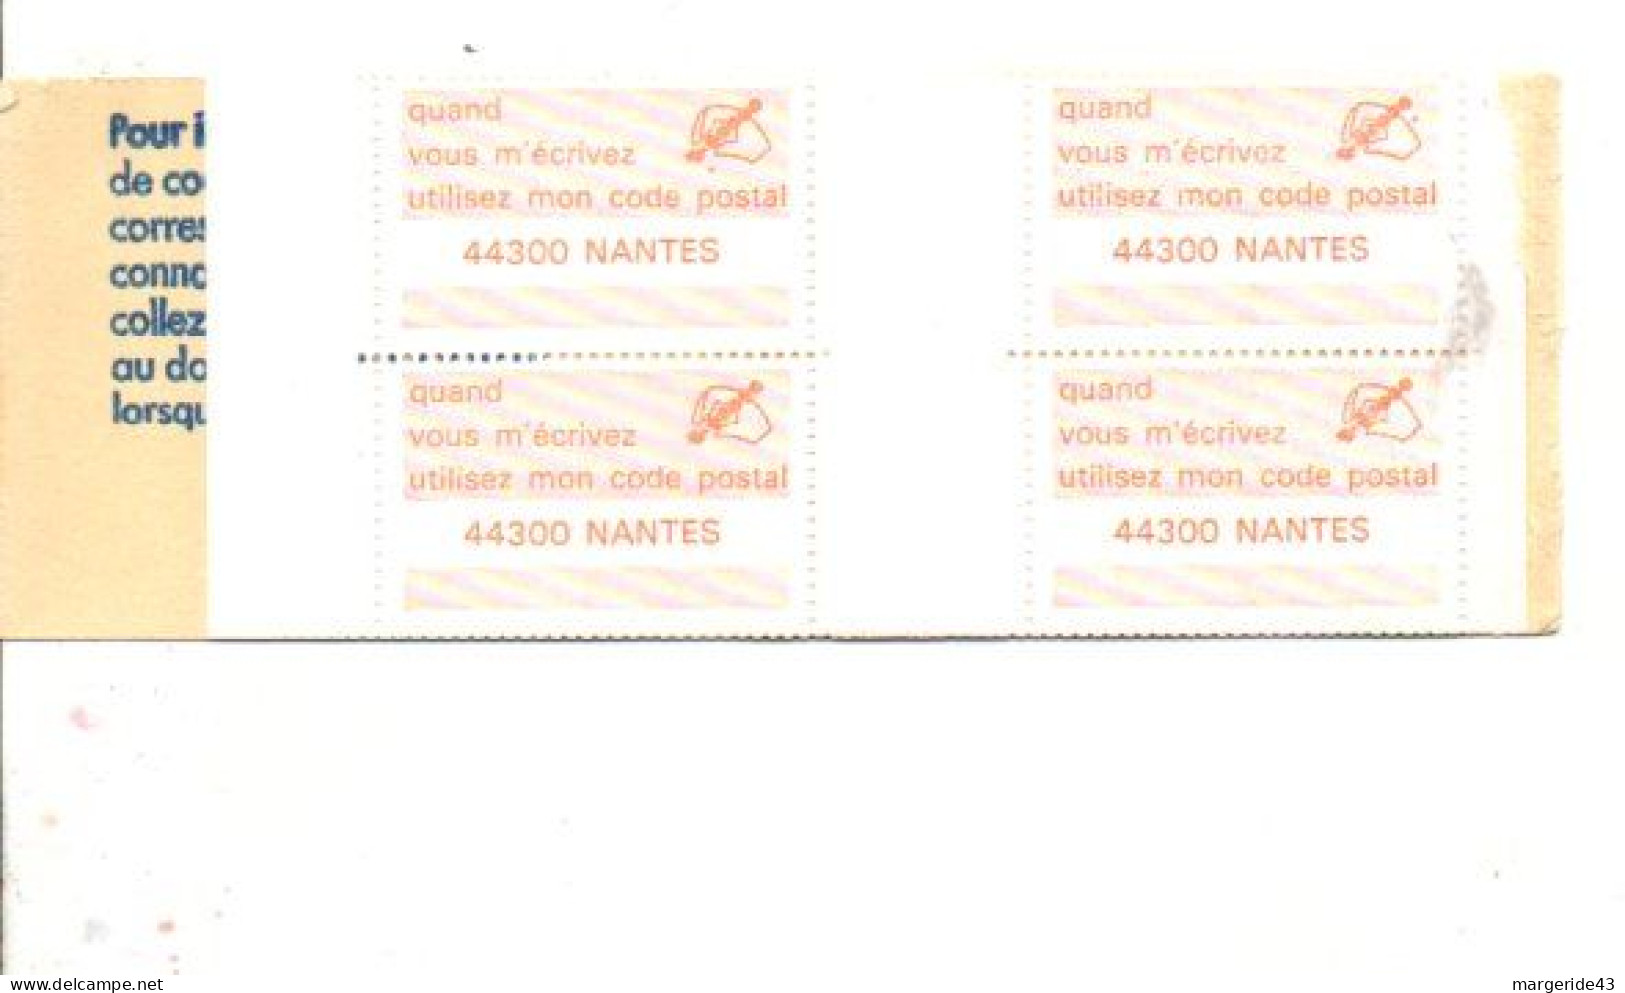 CARNET CODE POSTAL - 44300 NANTES JAUNE - Blokken & Postzegelboekjes